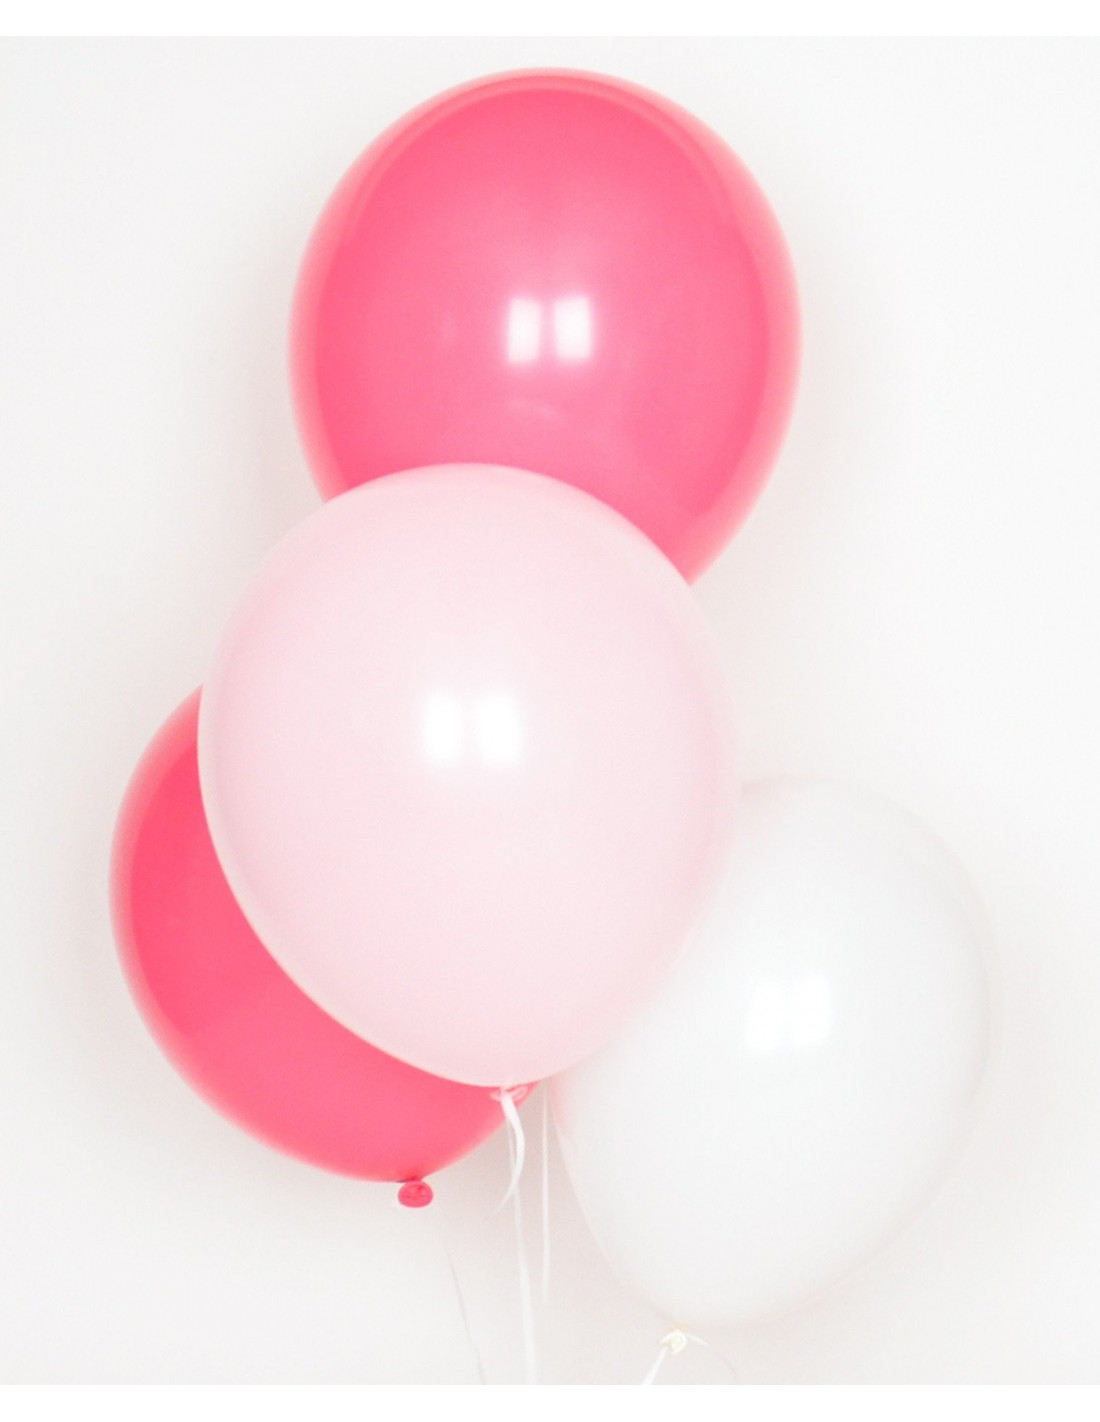 8 Ballons Anniversaire 1 An Roses et Blancs - Les Bambetises